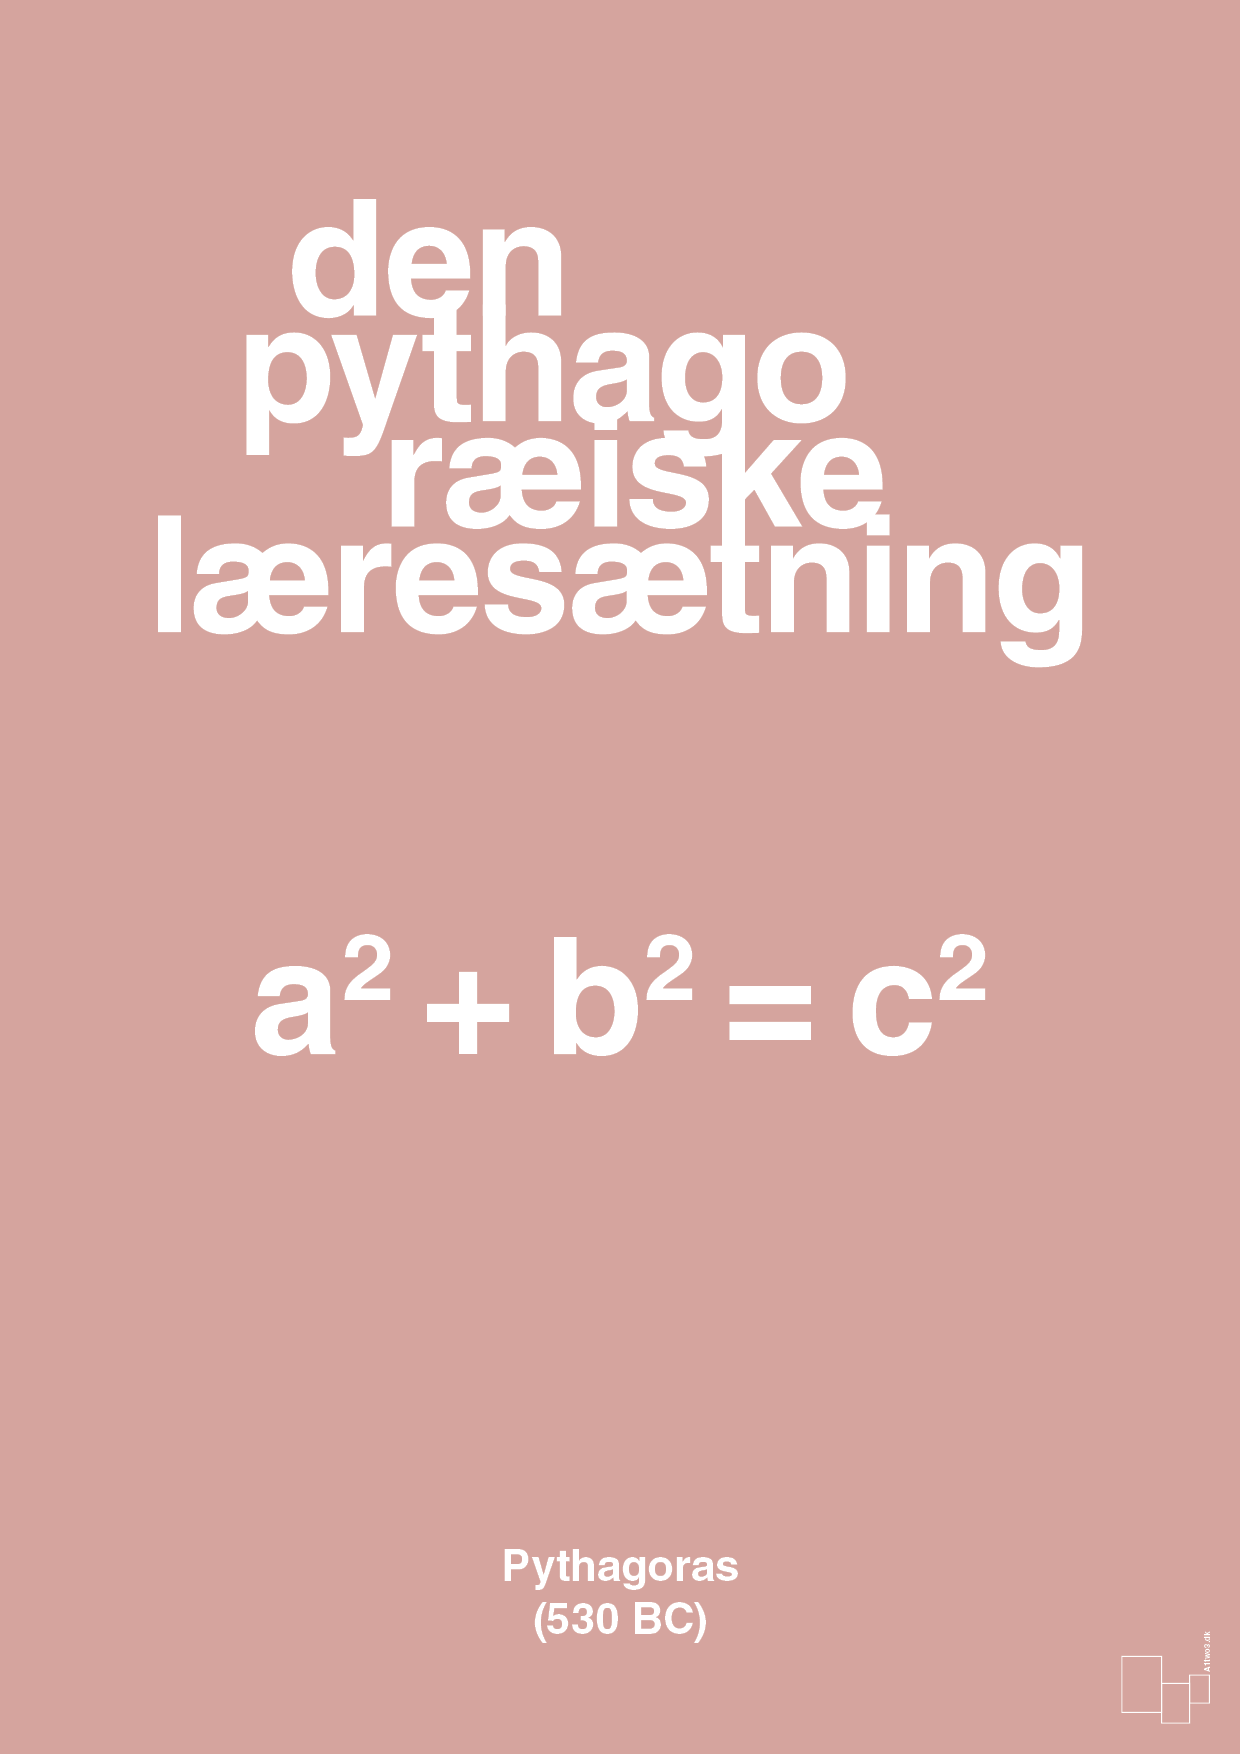 den pythagoræiske læresætning - Plakat med Videnskab i Bubble Shell